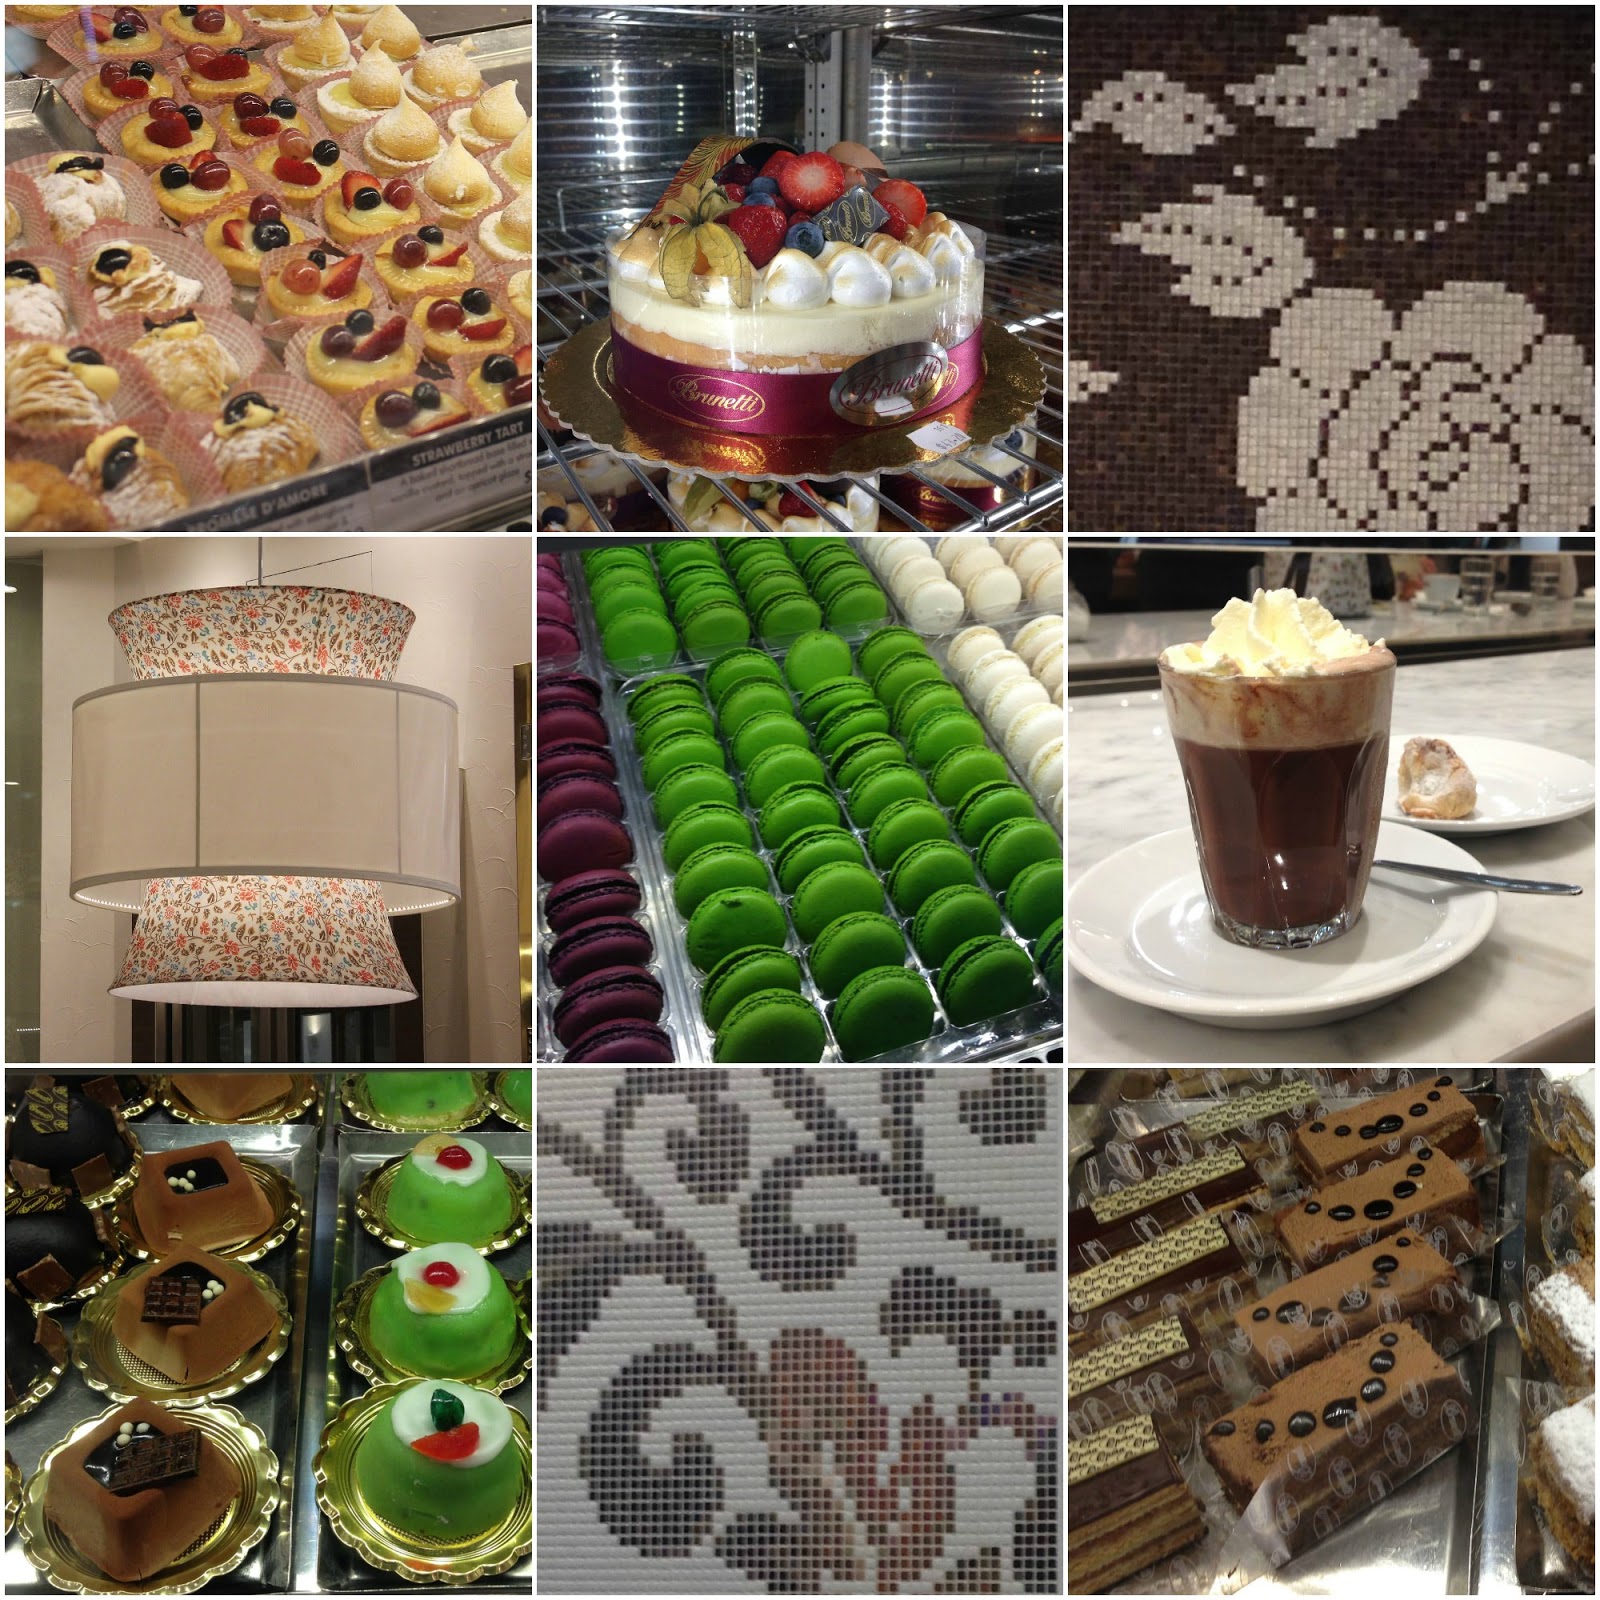 10 Best Halal Cake Shops In Singapore